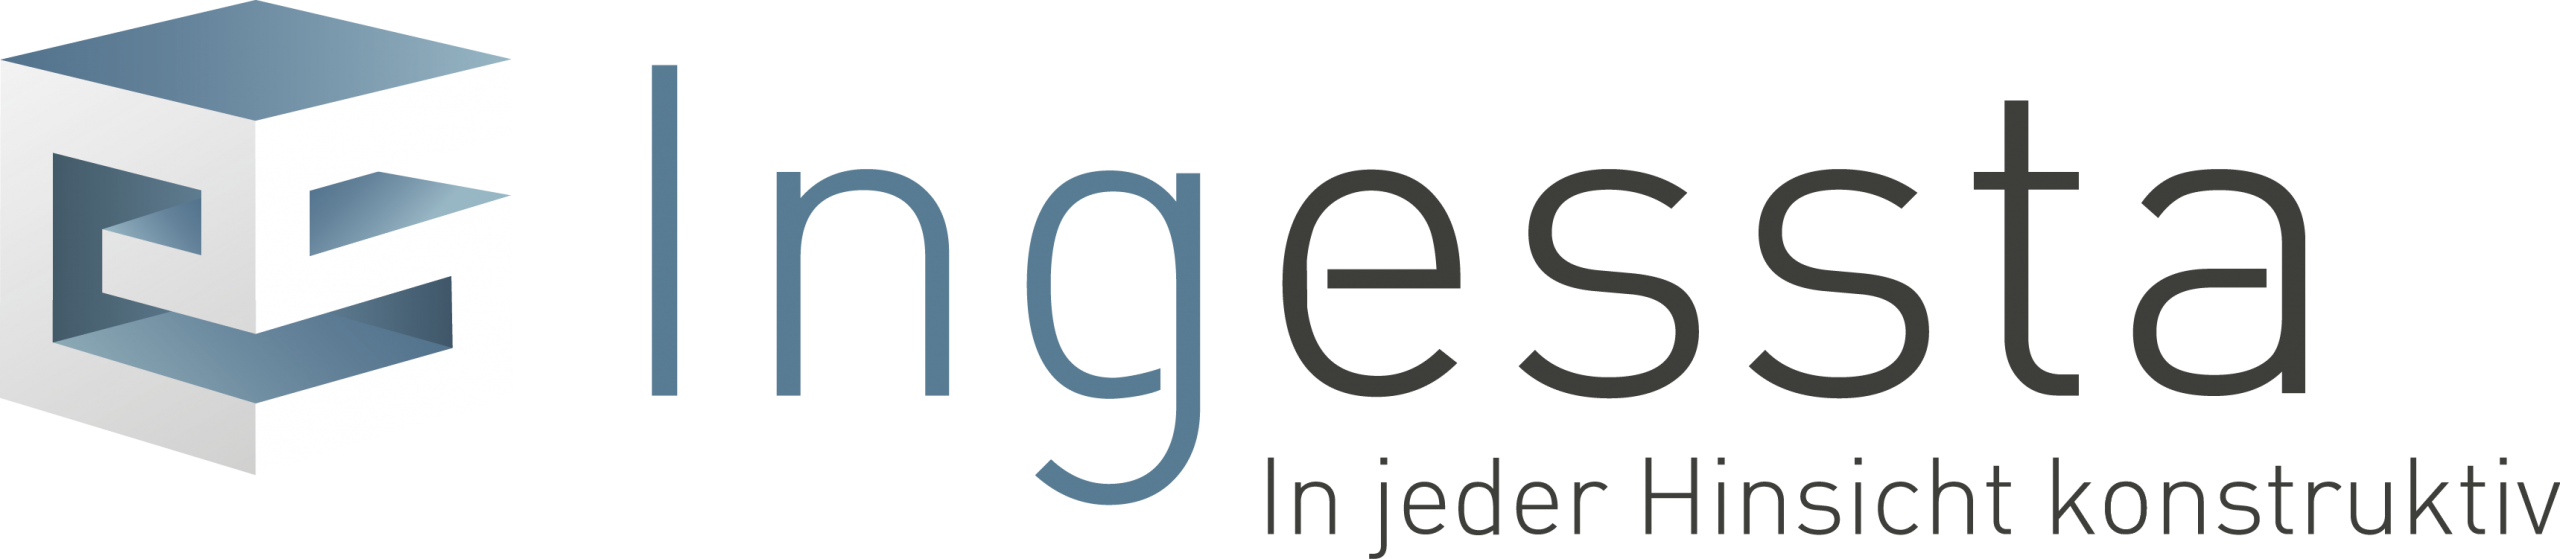 Ingessta GmbH logo